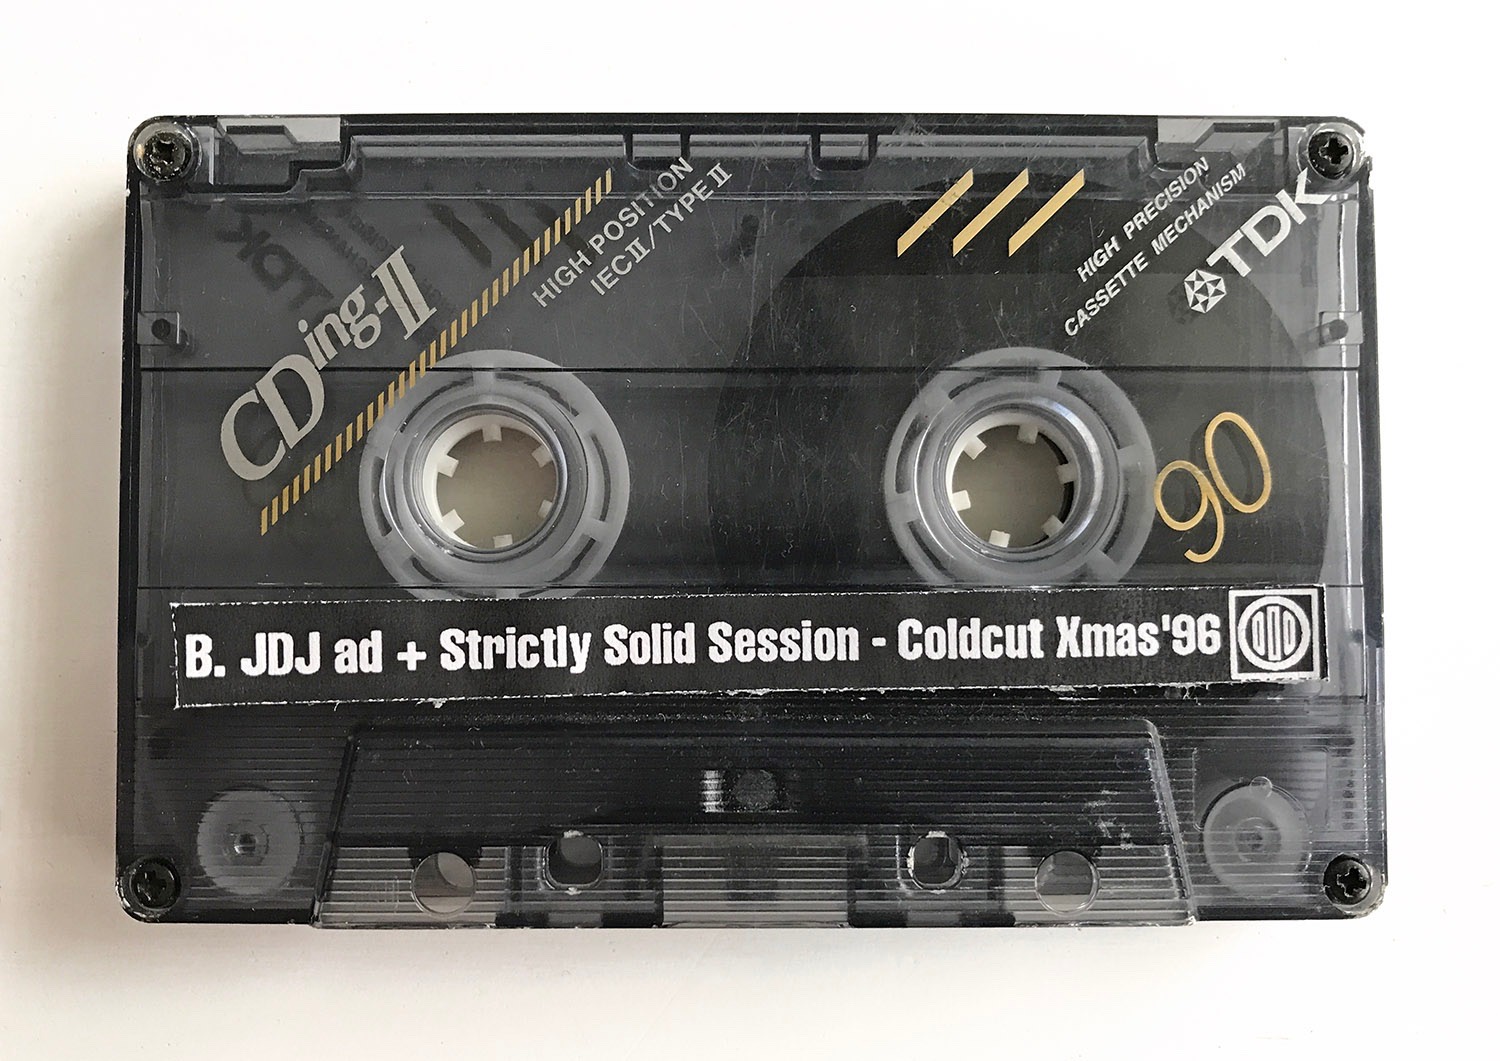 MS132 tape 12:1996